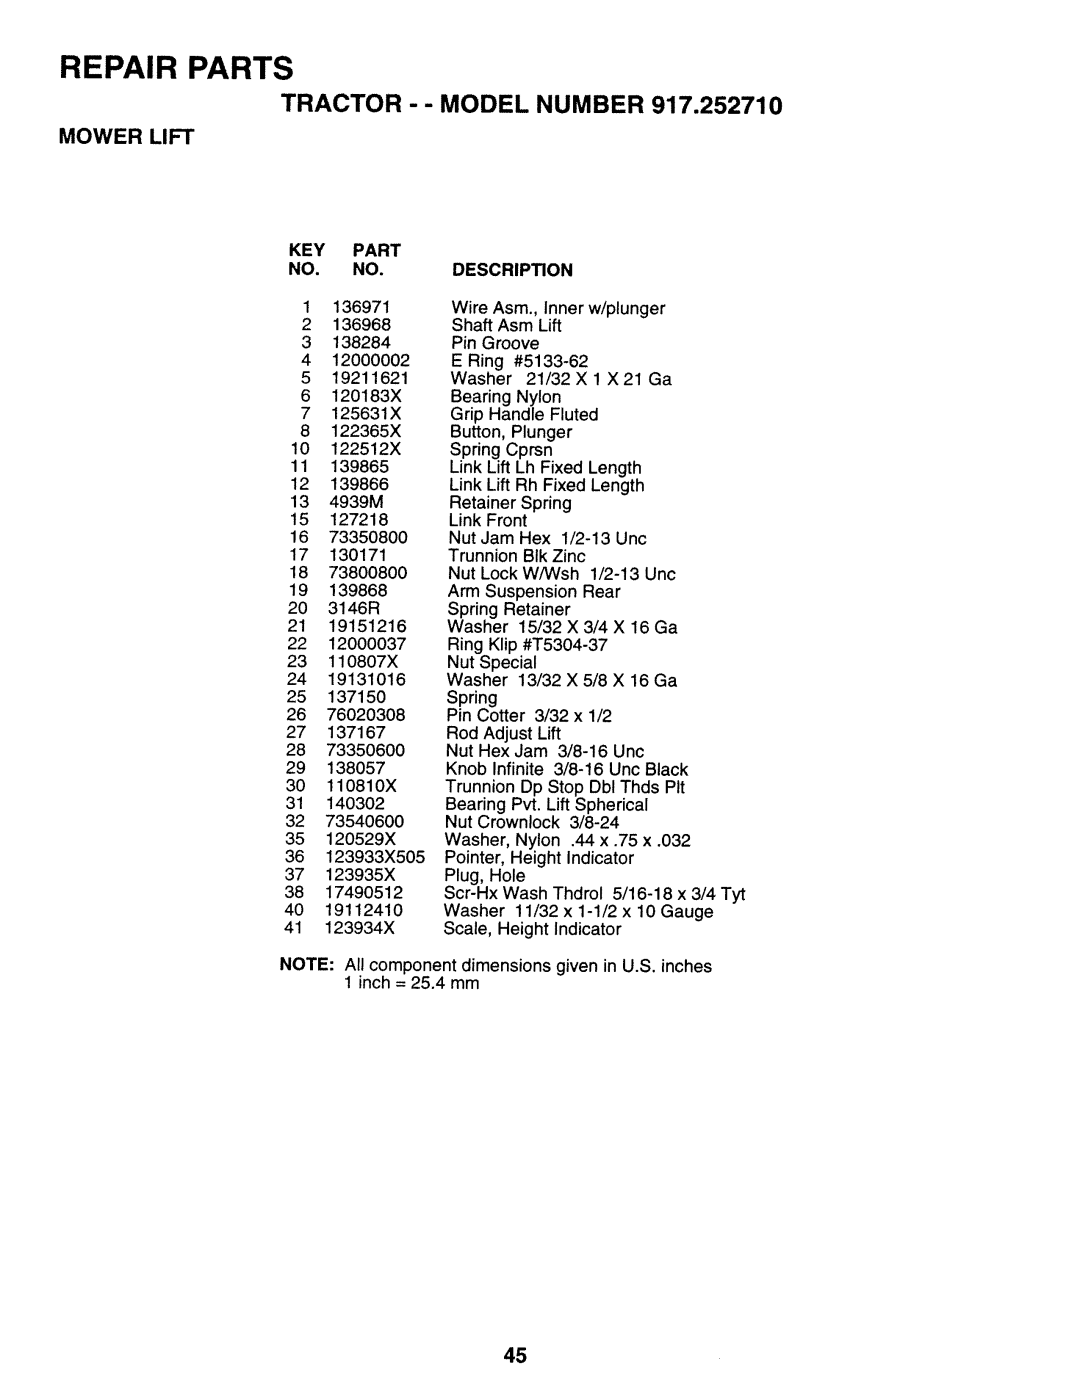 Sears 917.25271 owner manual Mower Lift, Repair Parts, Tractor -- Model Number, Description 